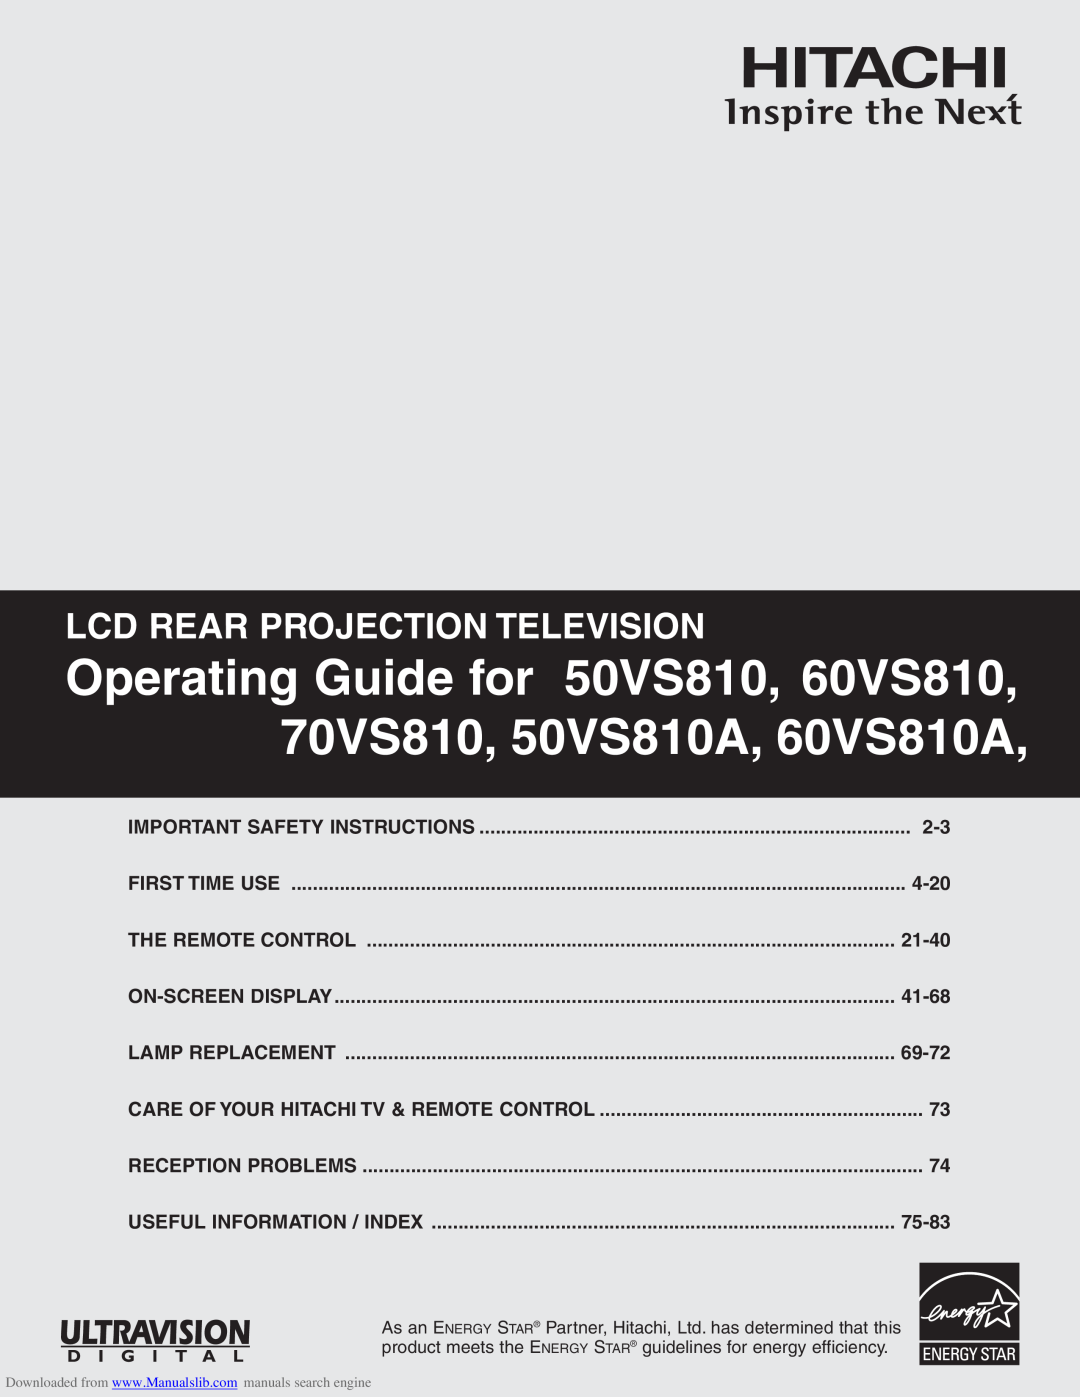 Hitachi important safety instructions Operating Guide for 50VS810, 60VS810, 70VS810, 50VS810A, 60VS810A 